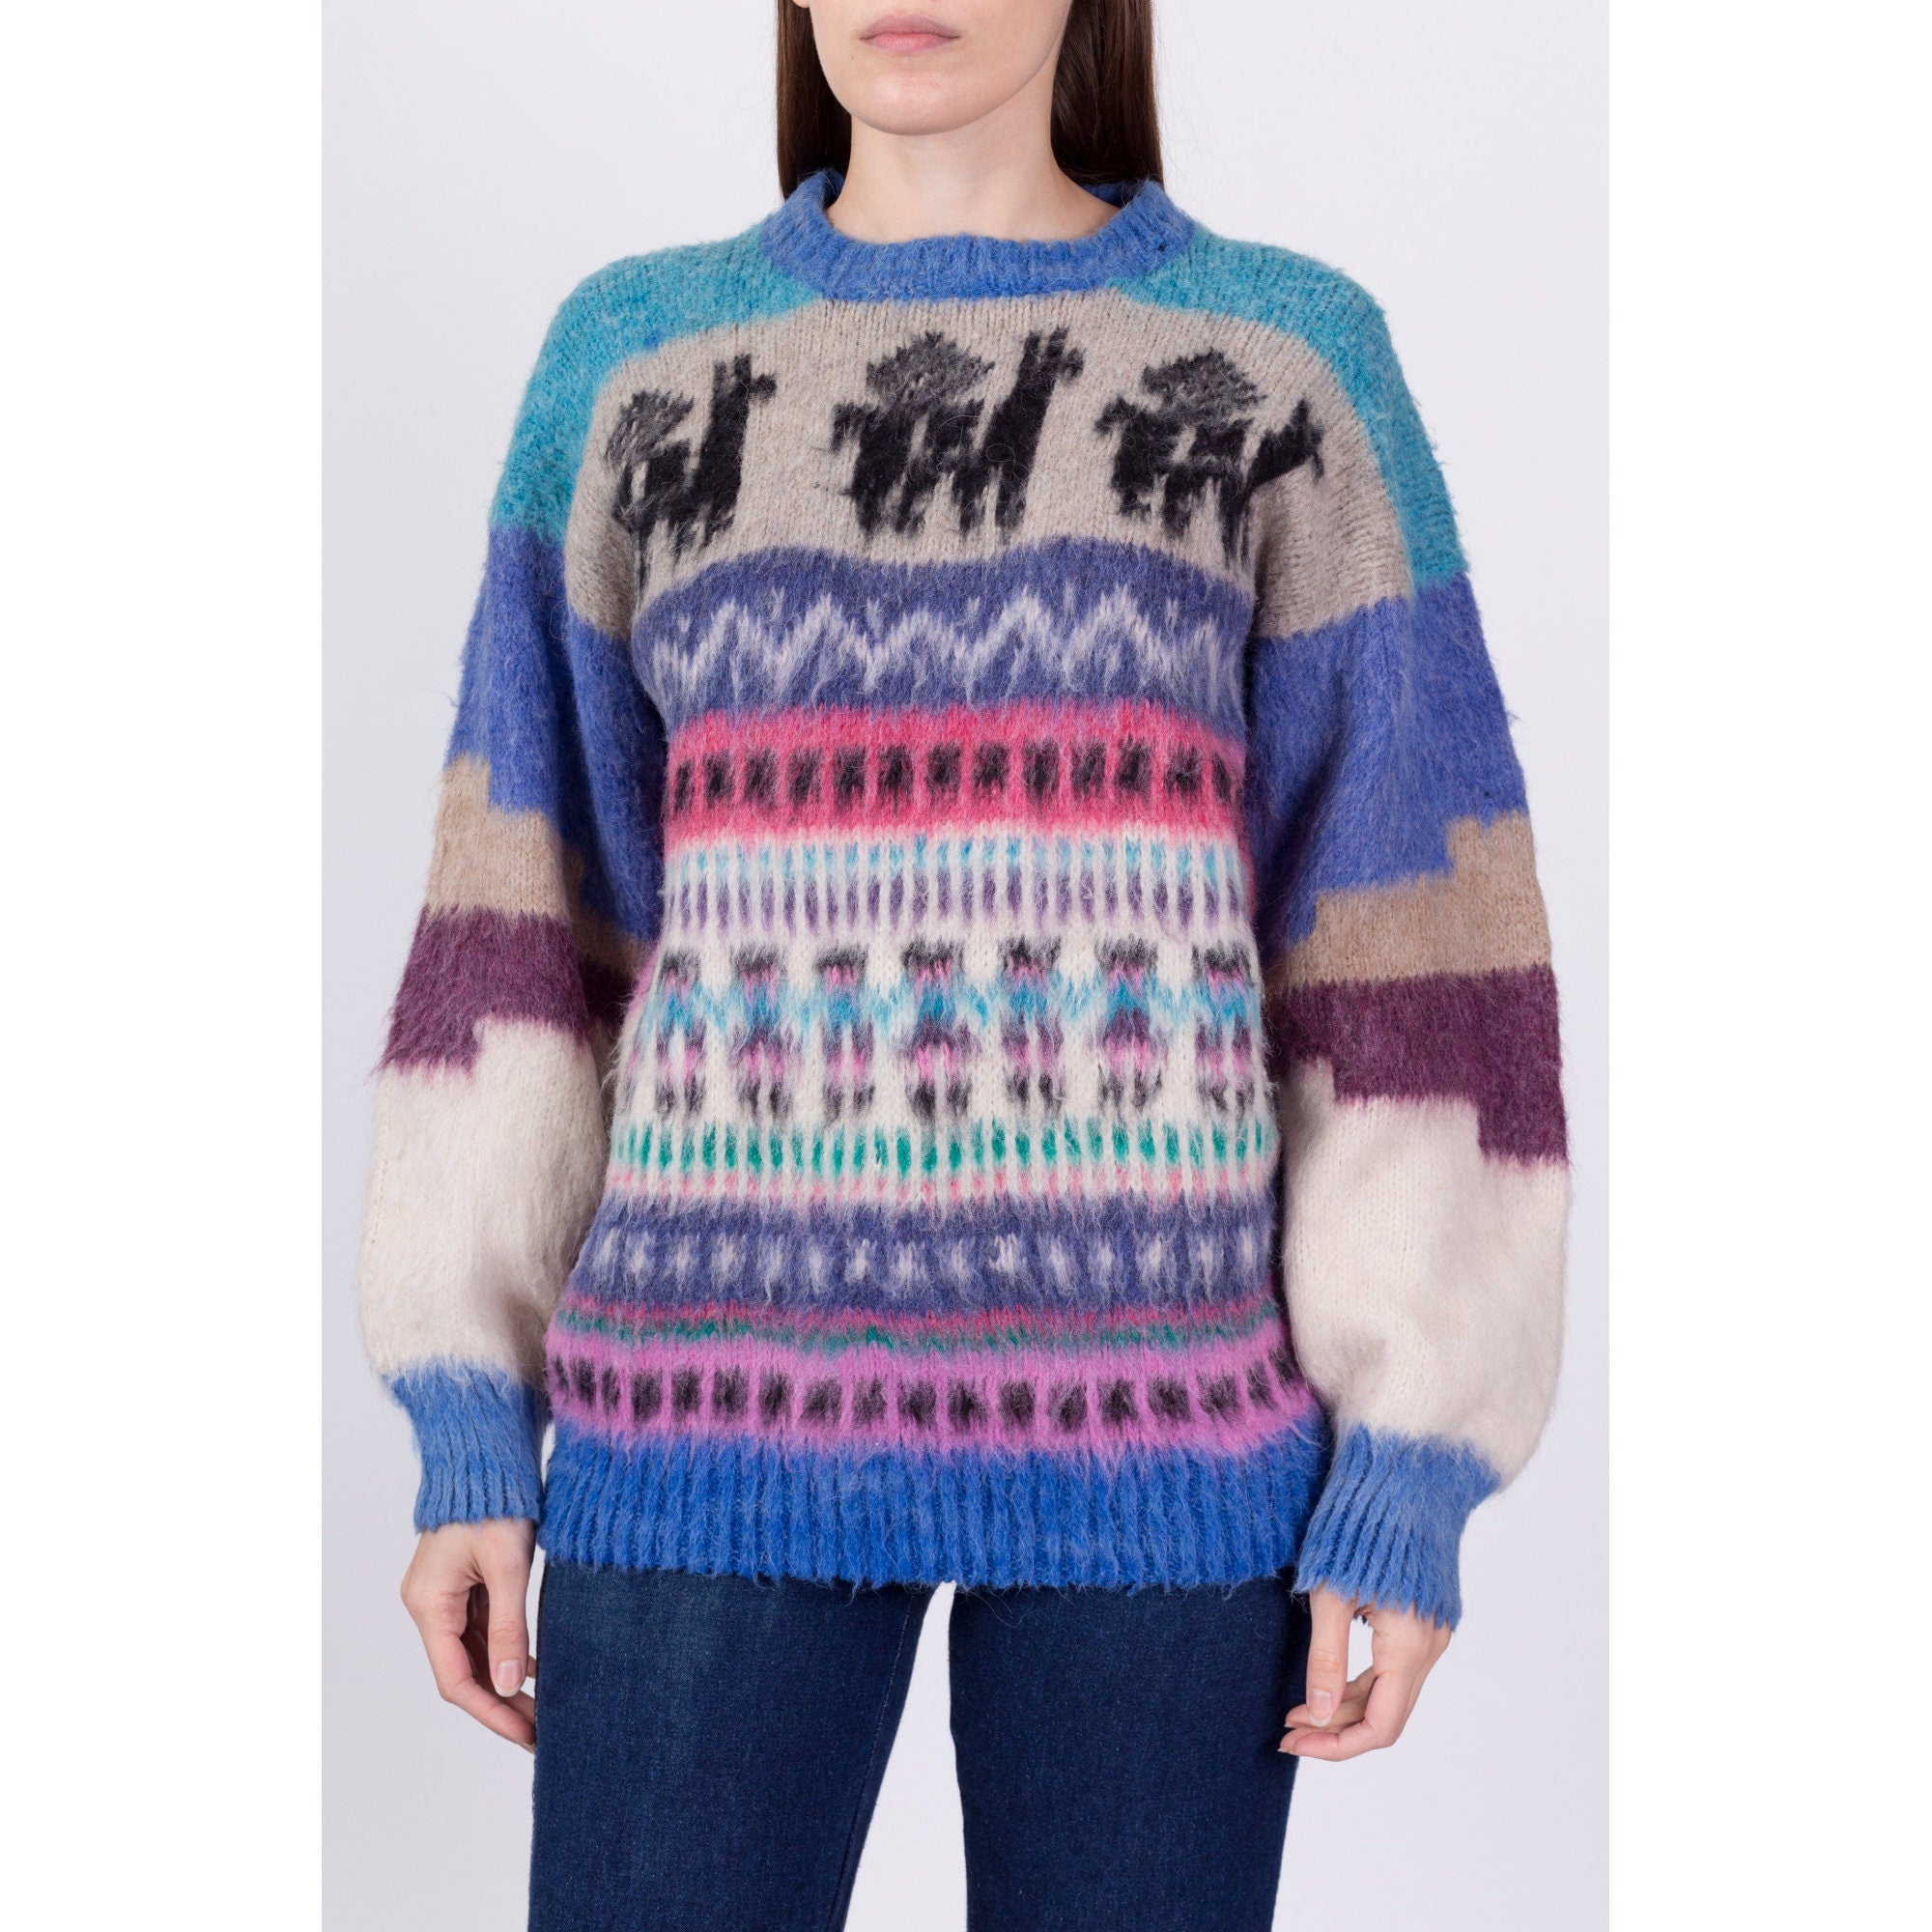 Vintage Alpaca Shaggy Knit Sweater - Men's Medium, Women's Large